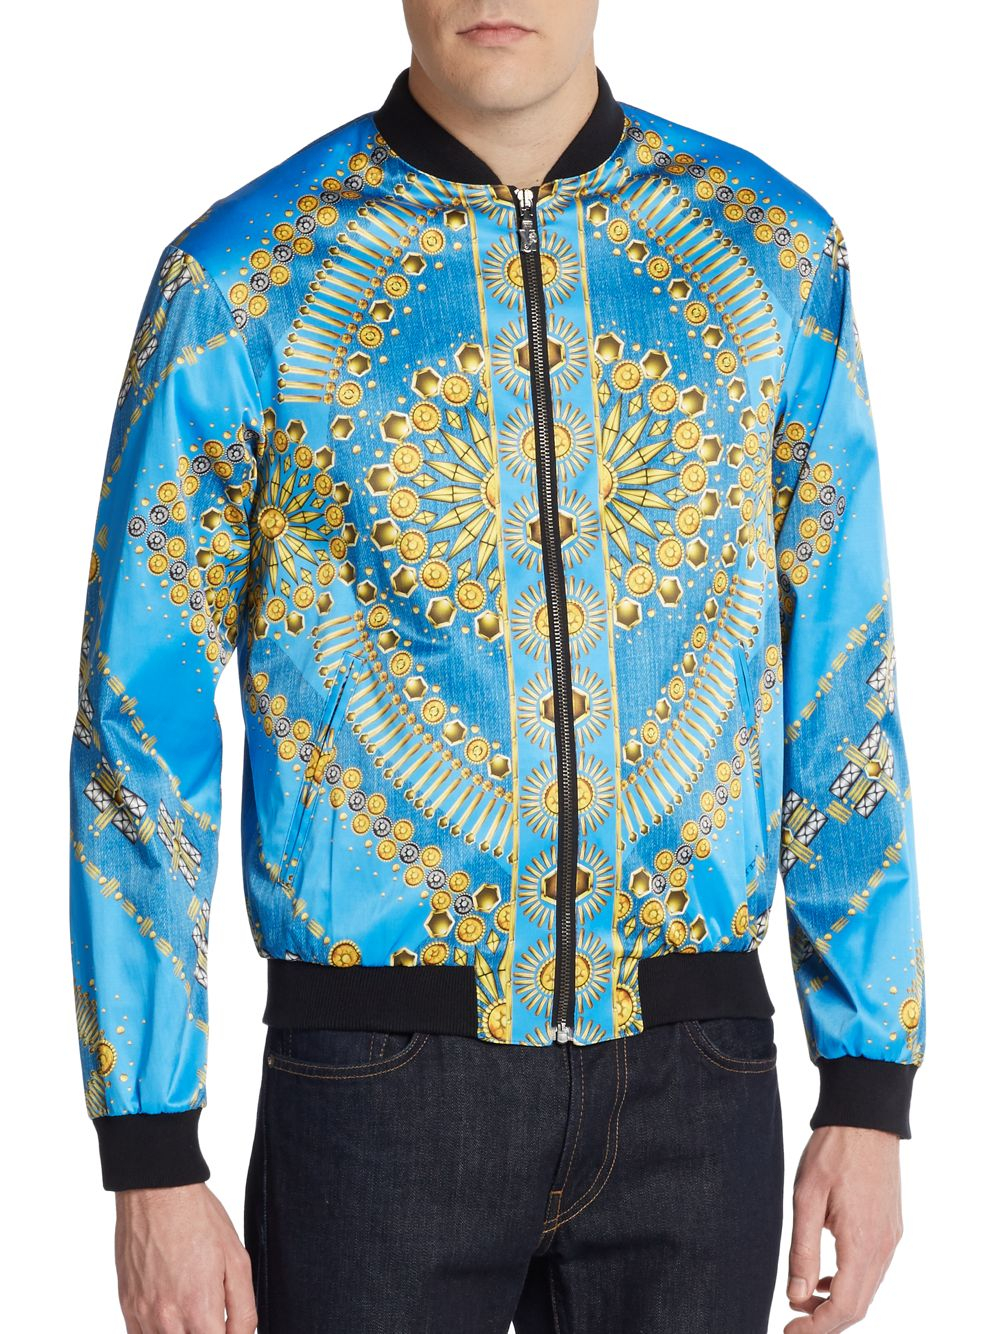 versace blue bomber jacket